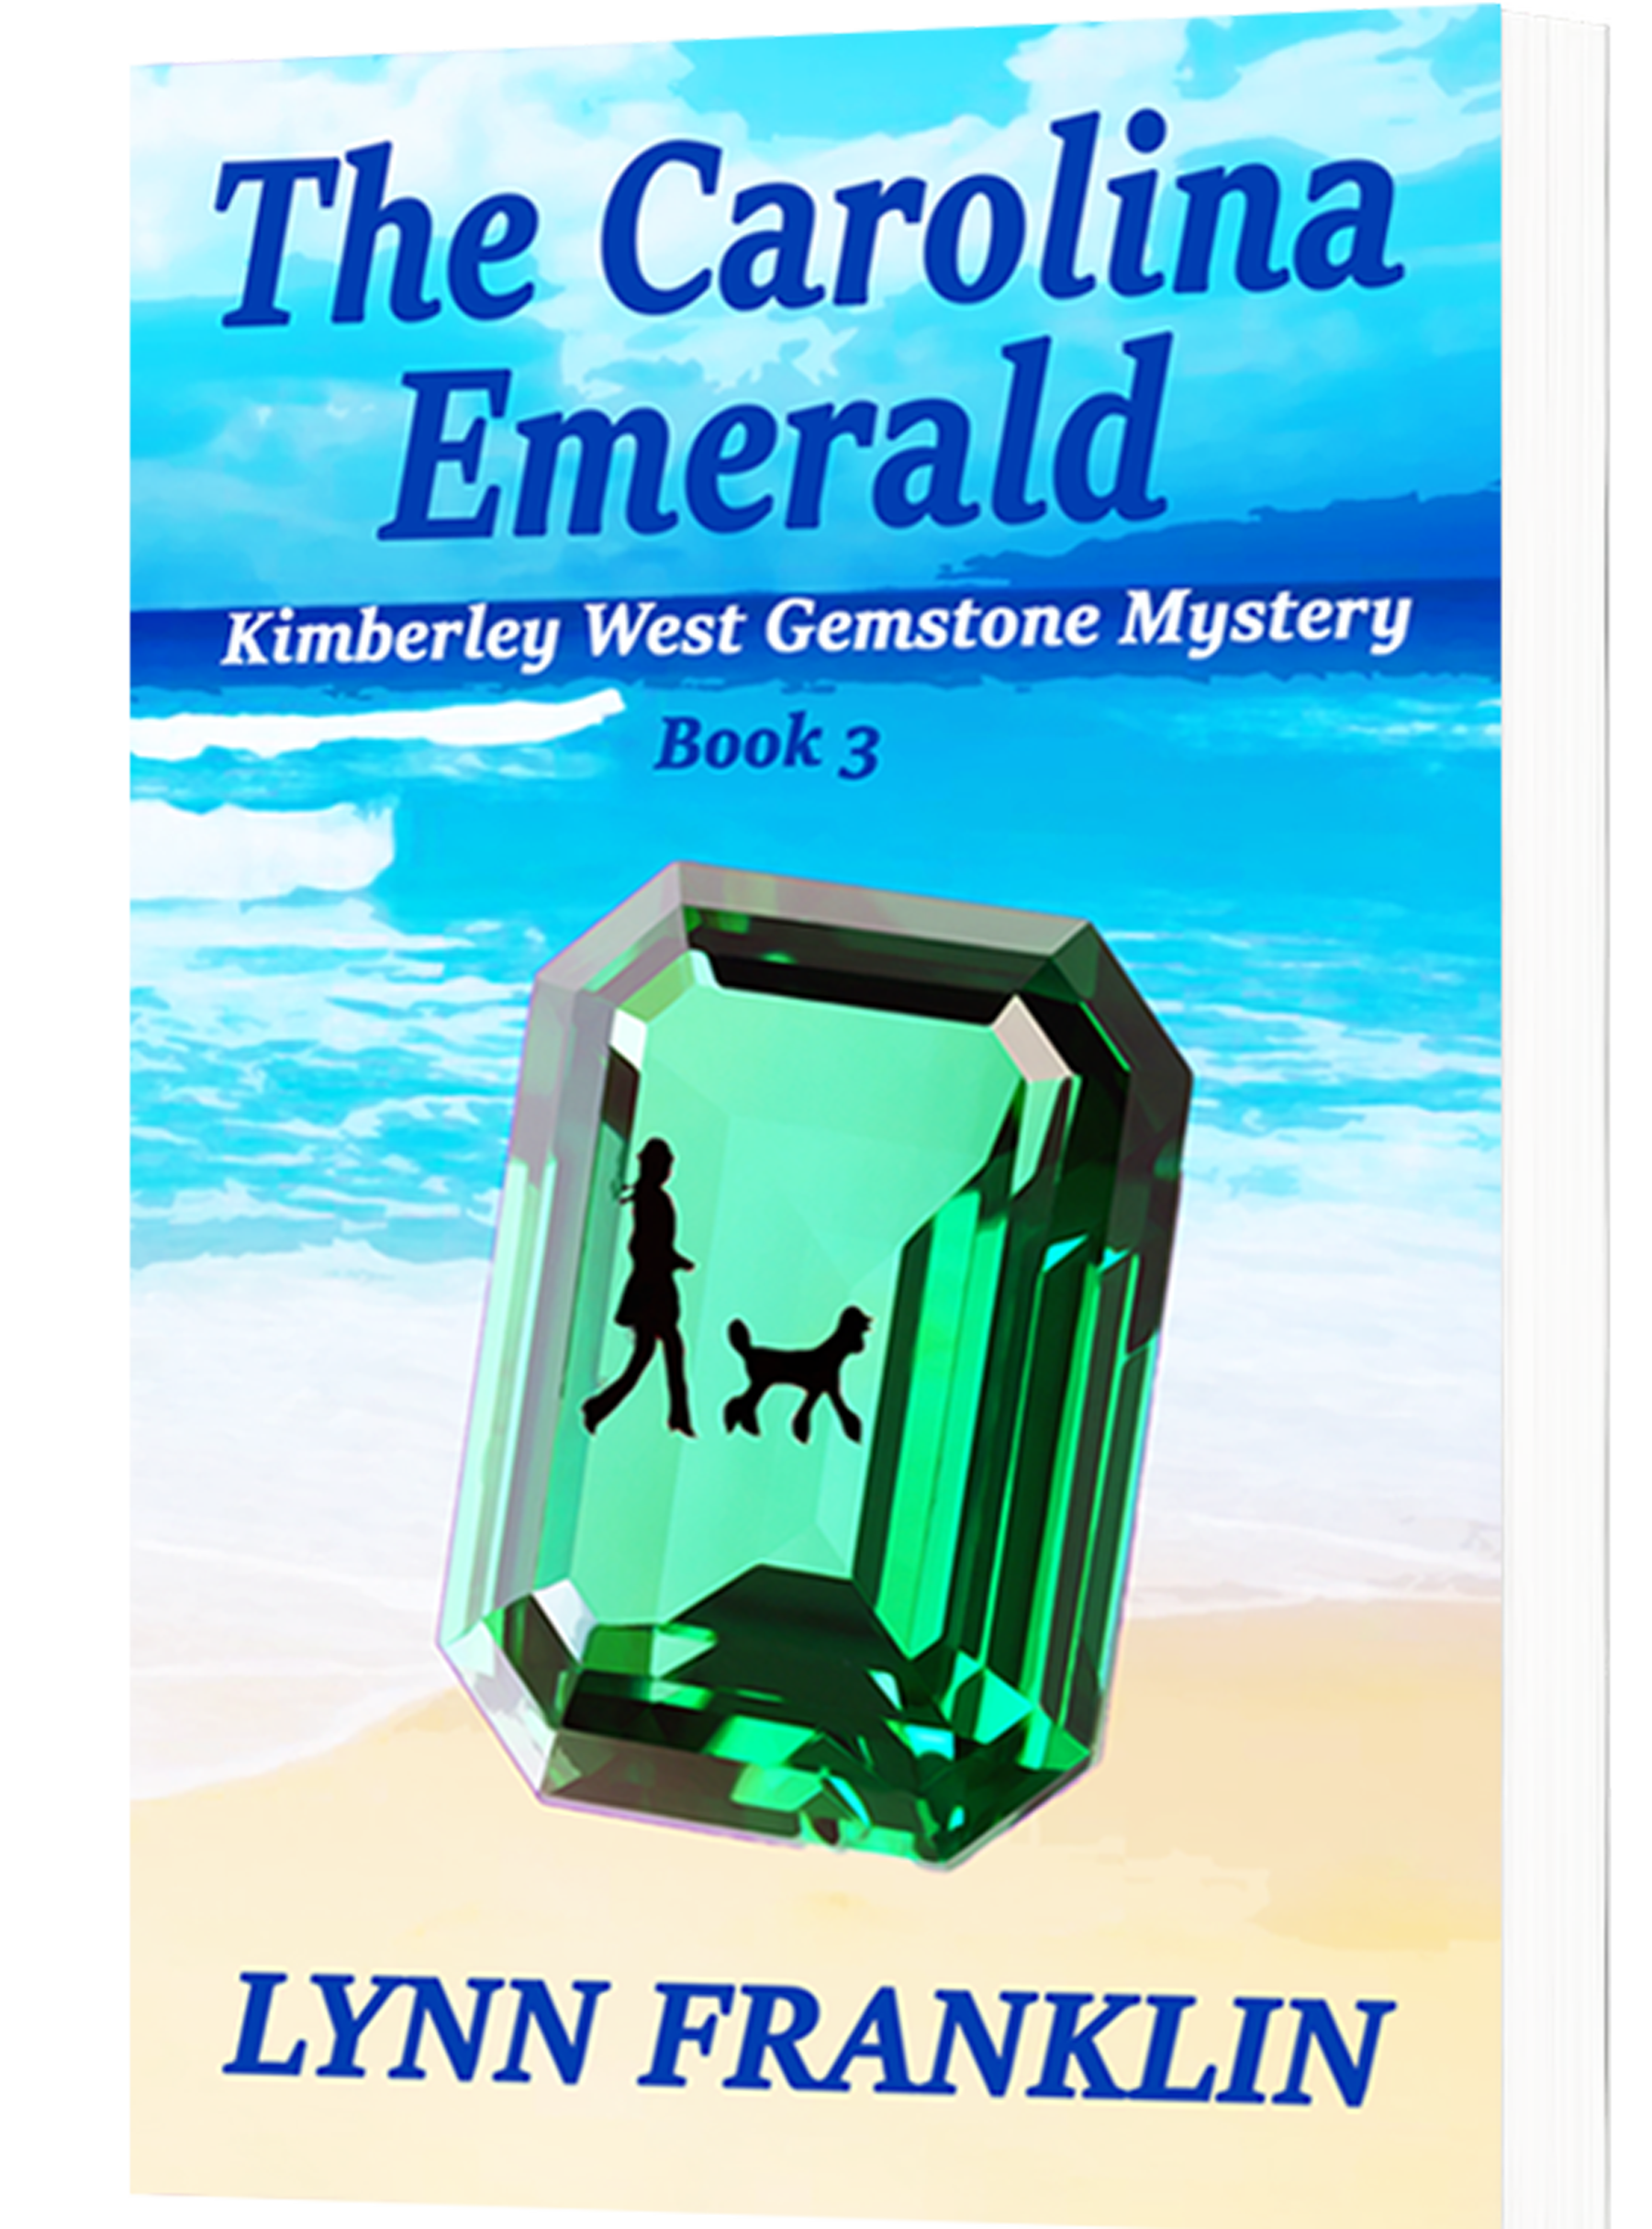 The Carolina Emerald: Kimberley West Gemstone Mystery Book 3